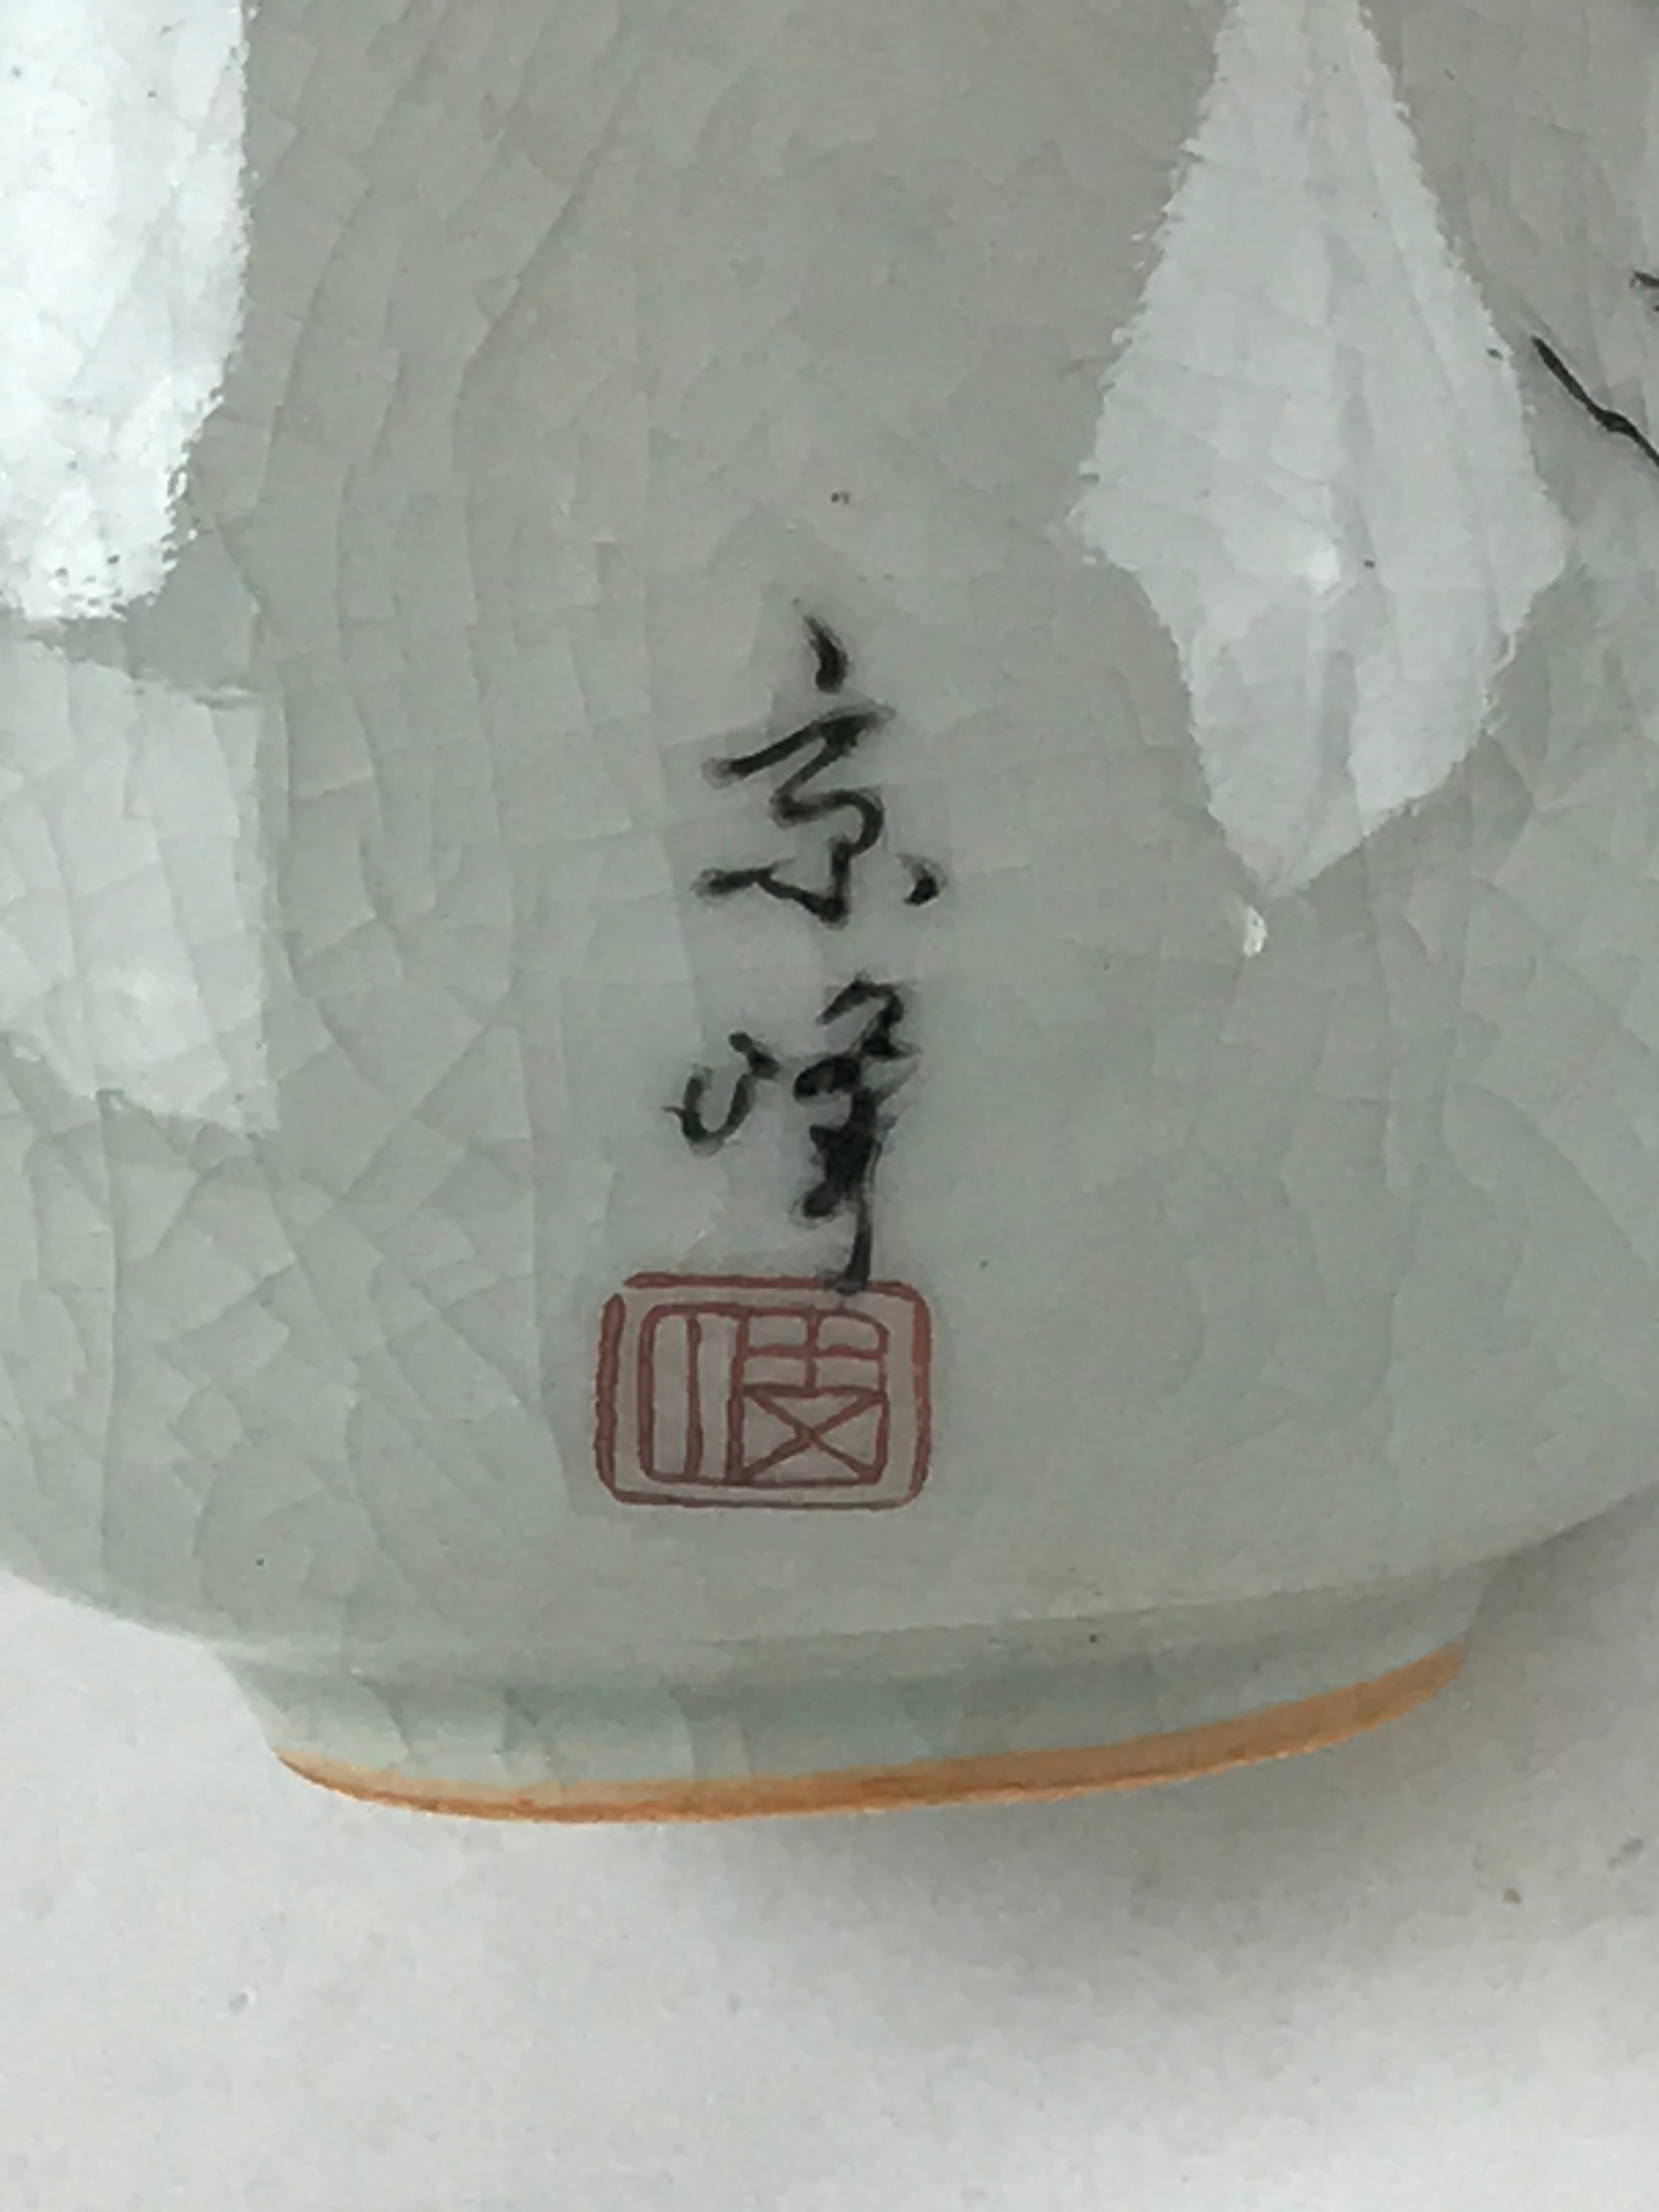 Japanese Ceramic Teacup Vtg Iris Flower Crackle Glaze White Yunomi Sencha TC412